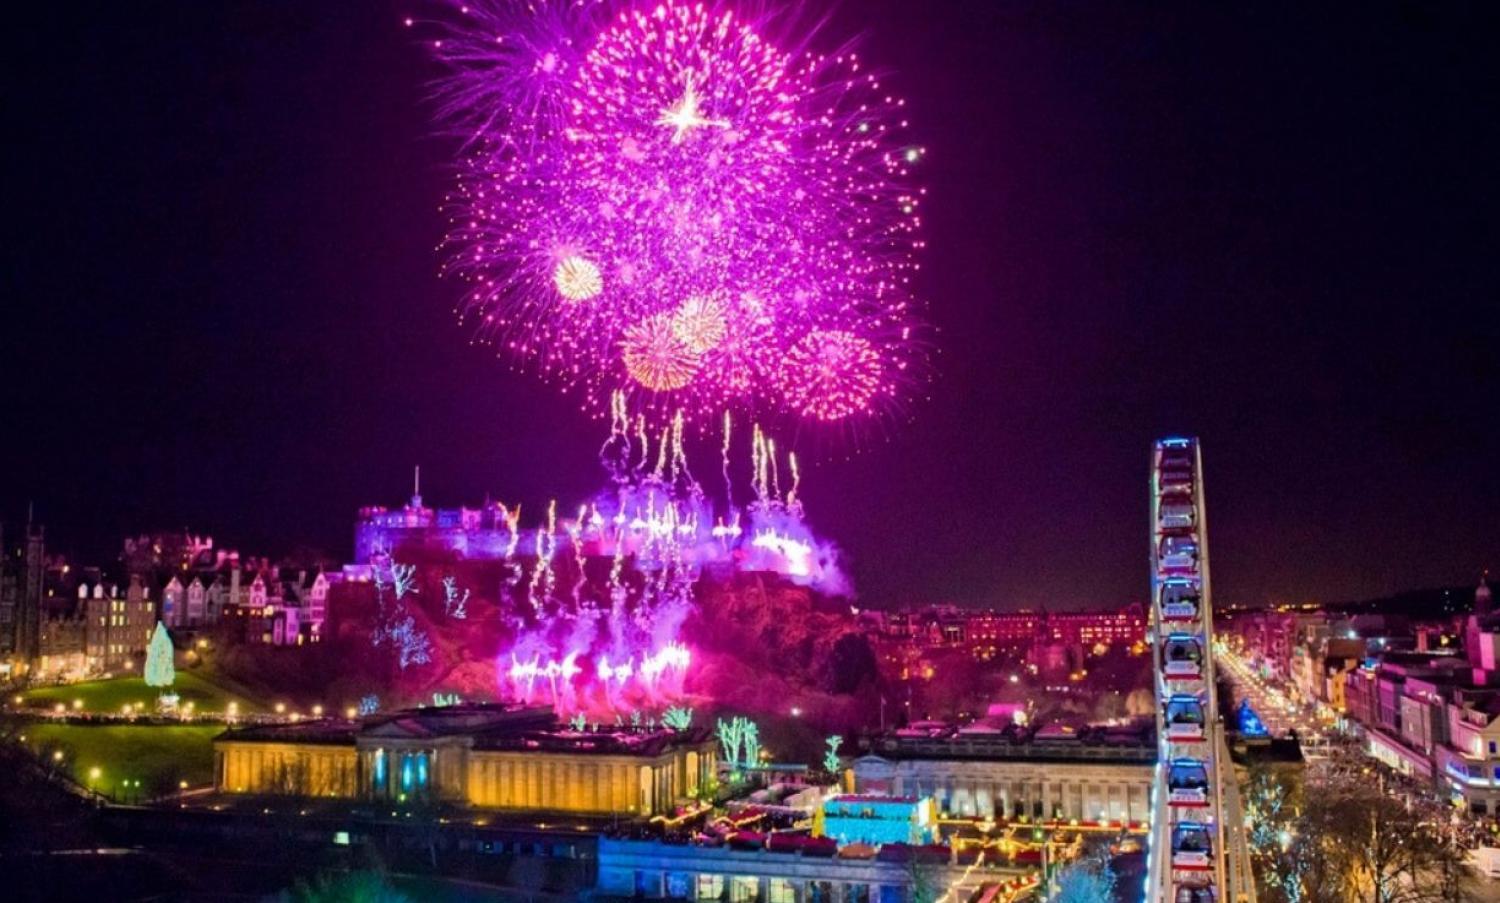 Purple fireworks above Edinburgh Castle and Big Wheel at Edinburgh's Hogmanay